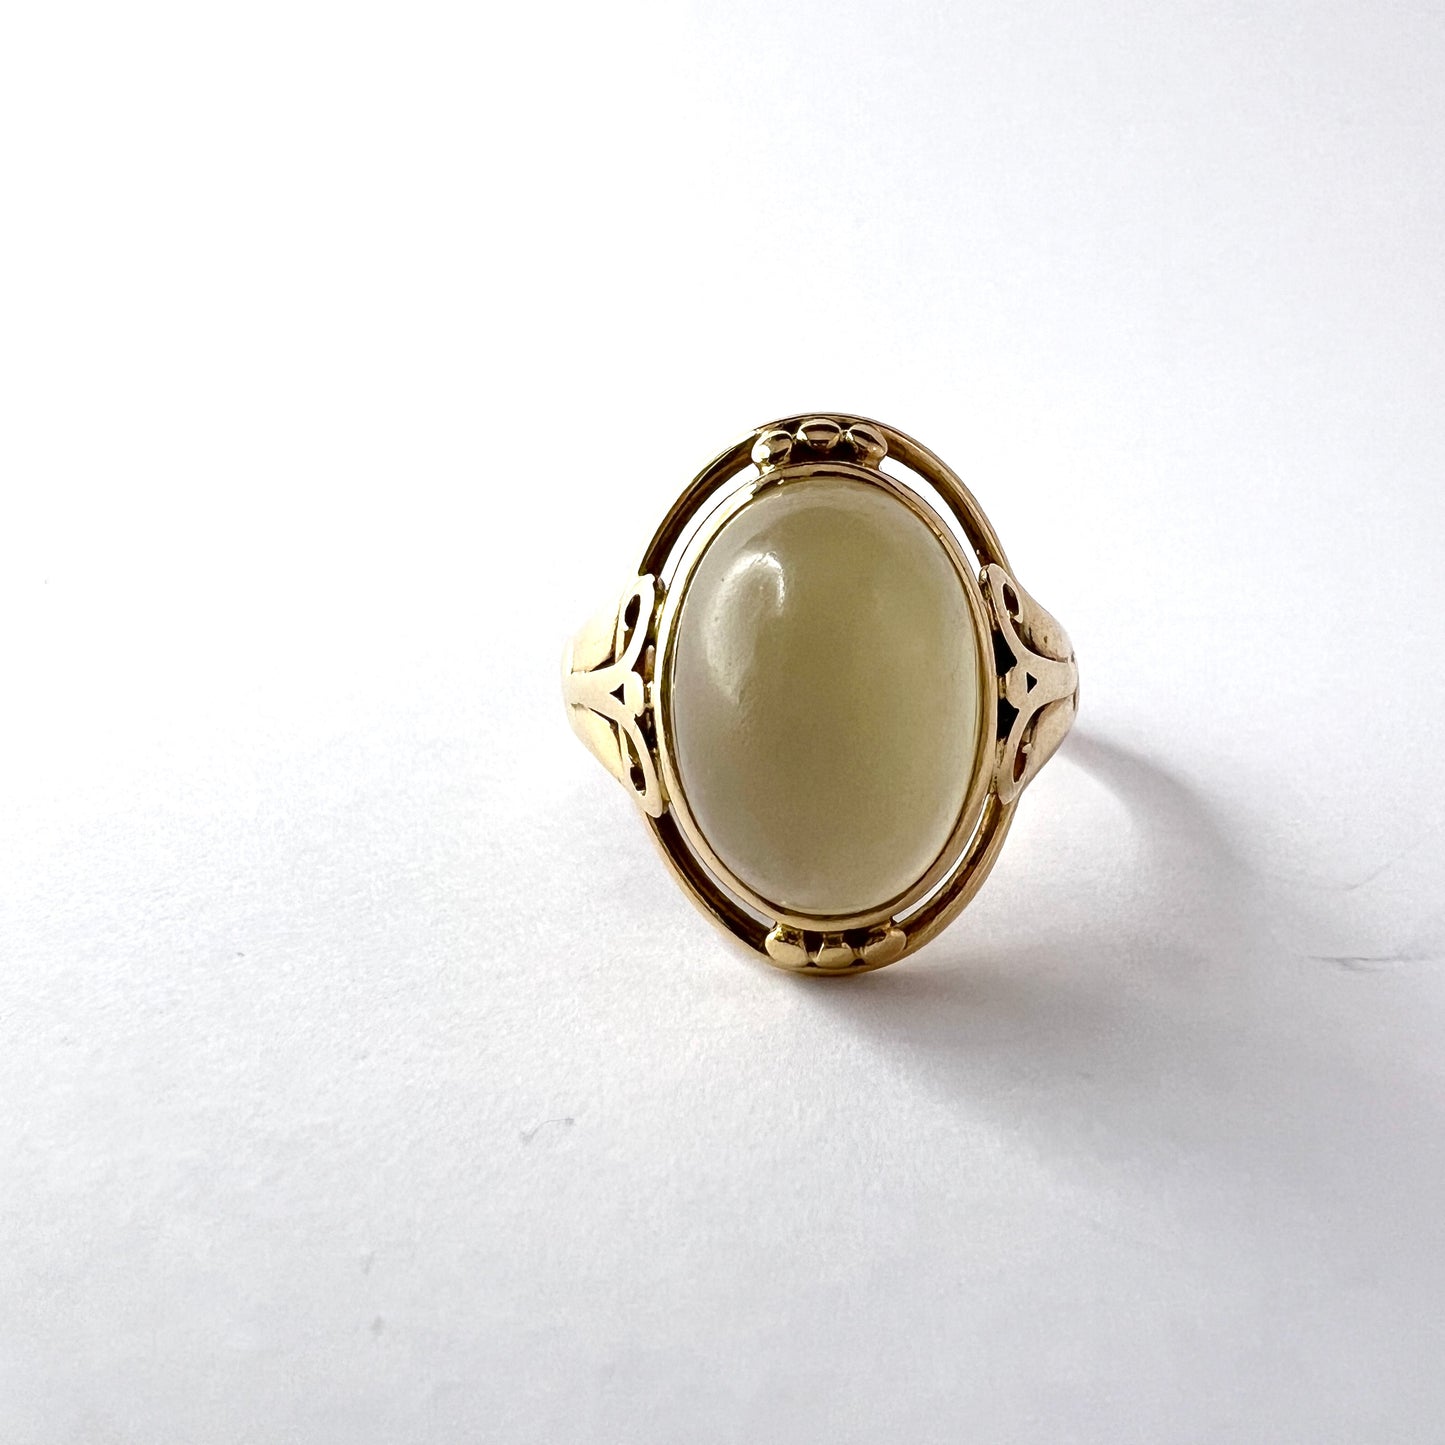 J Petterson, Sweden 1952. Vintage 18k Gold Milky Quartz Ring.